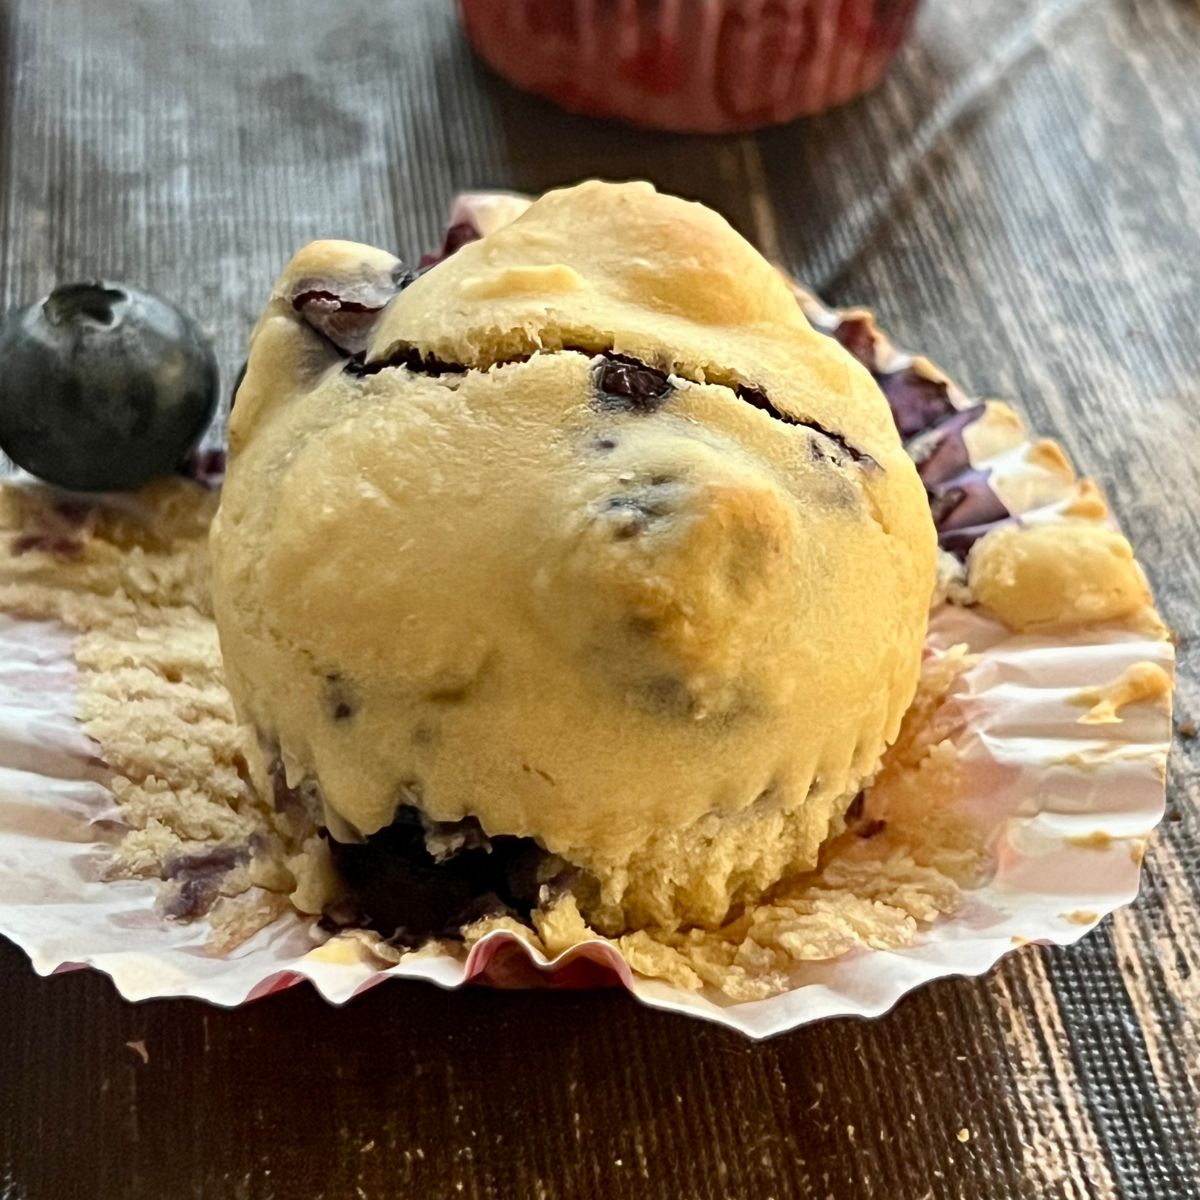 One homemade WW banana blueberry muffin